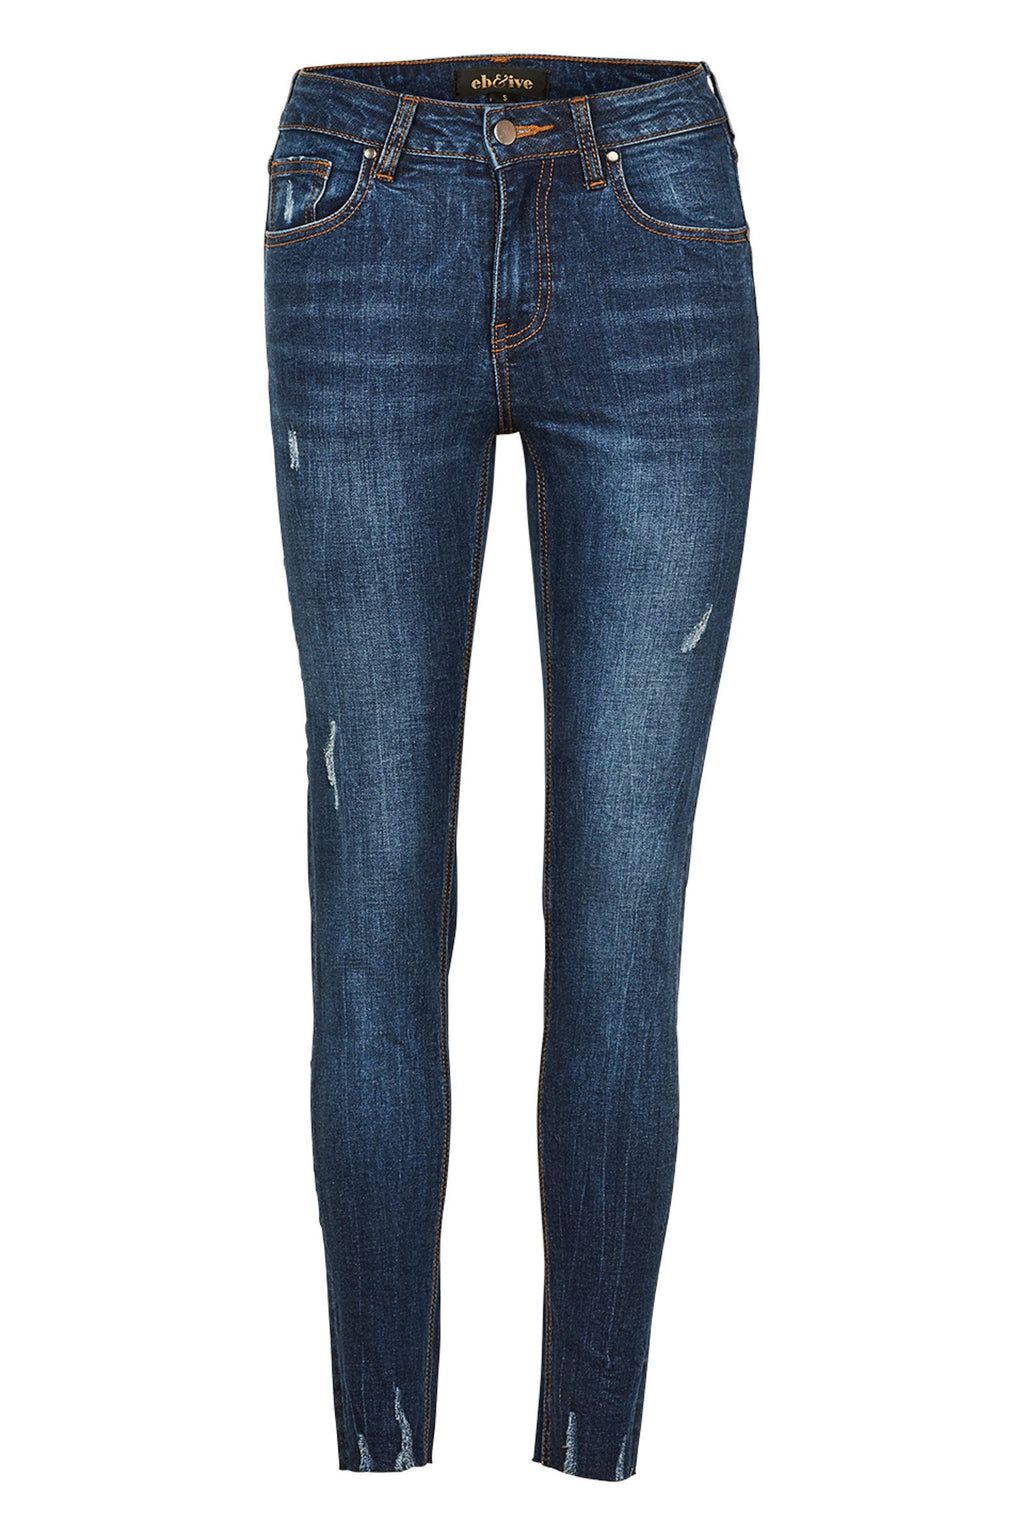 Eb&Ive Junko Jeans Blue Denim – Rosypenguin